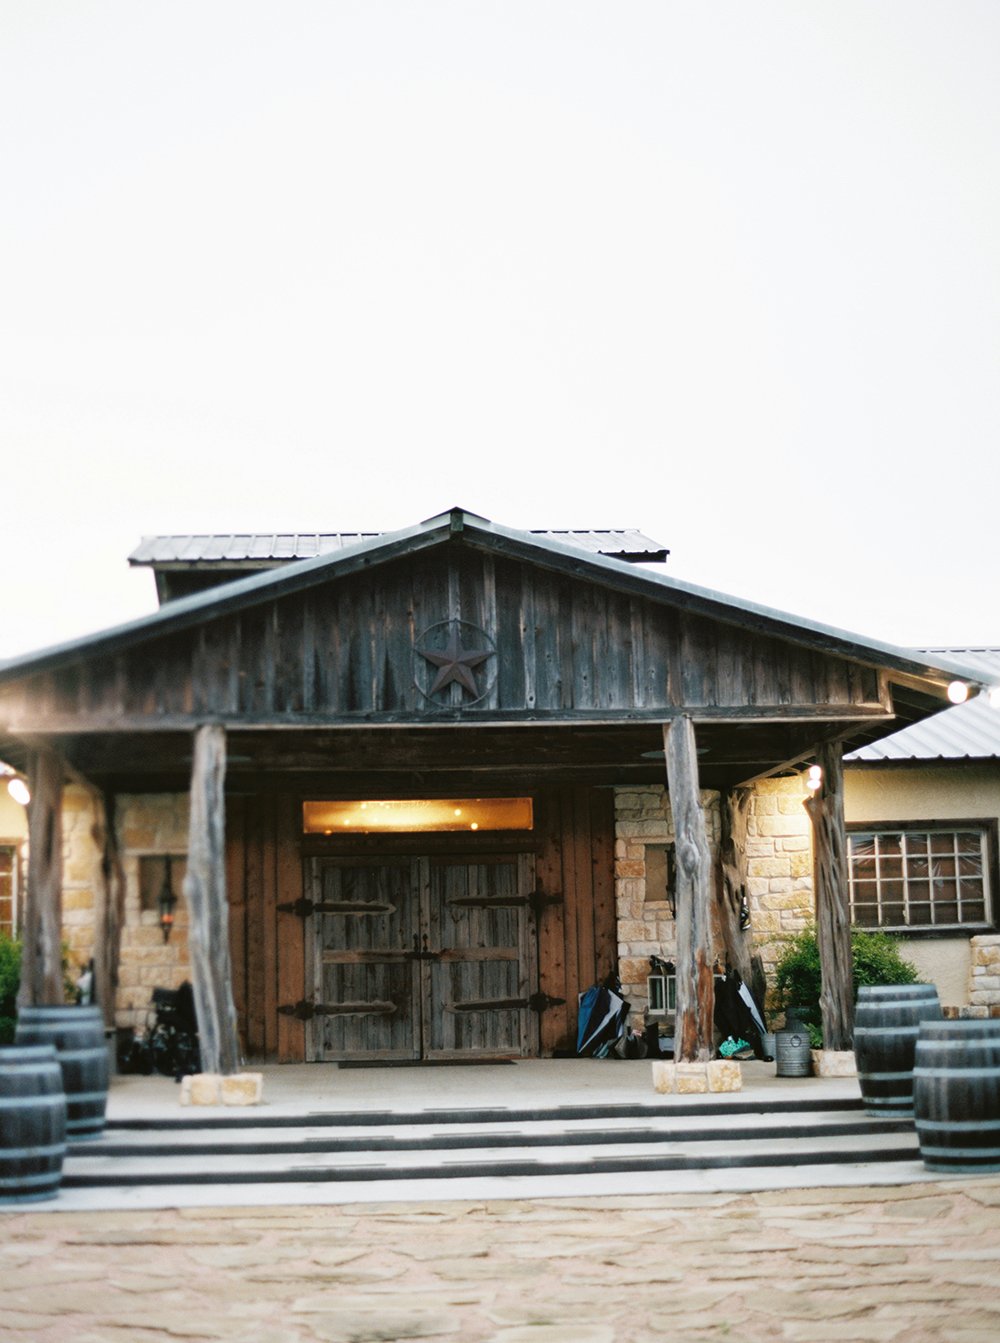 houston wedding venue - country rustic charm in texas